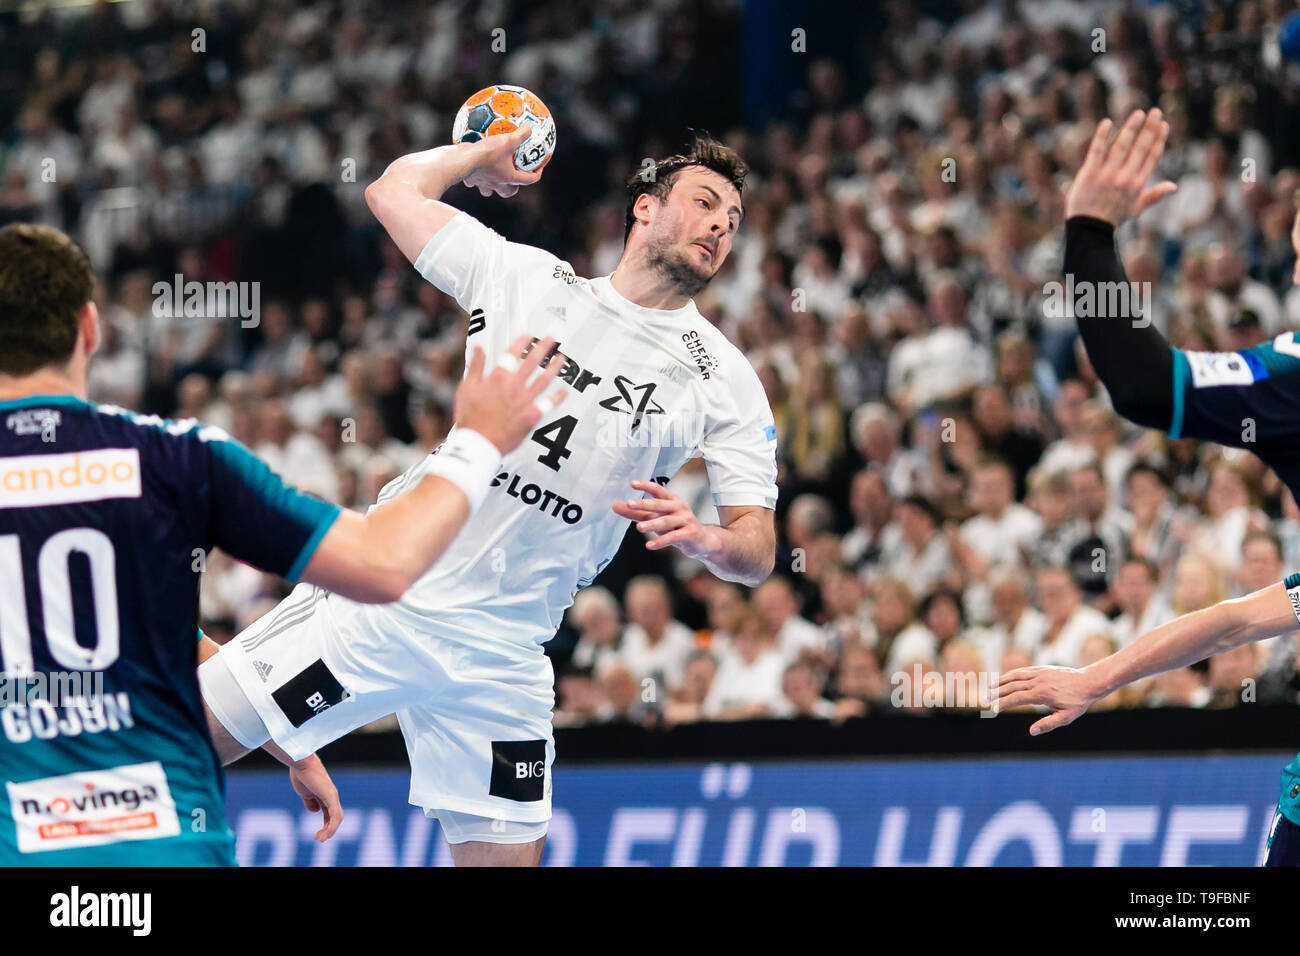 Kiel, Germany. 17th May, 2019. Handball: EHF Cup, THW Kiel - Foxes Berlin, Final  Four, Final. Kiel's Domagoj Duvnjak throws at the goal. Credit: Frank  Molter/dpa/Alamy Live News Stock Photo - Alamy